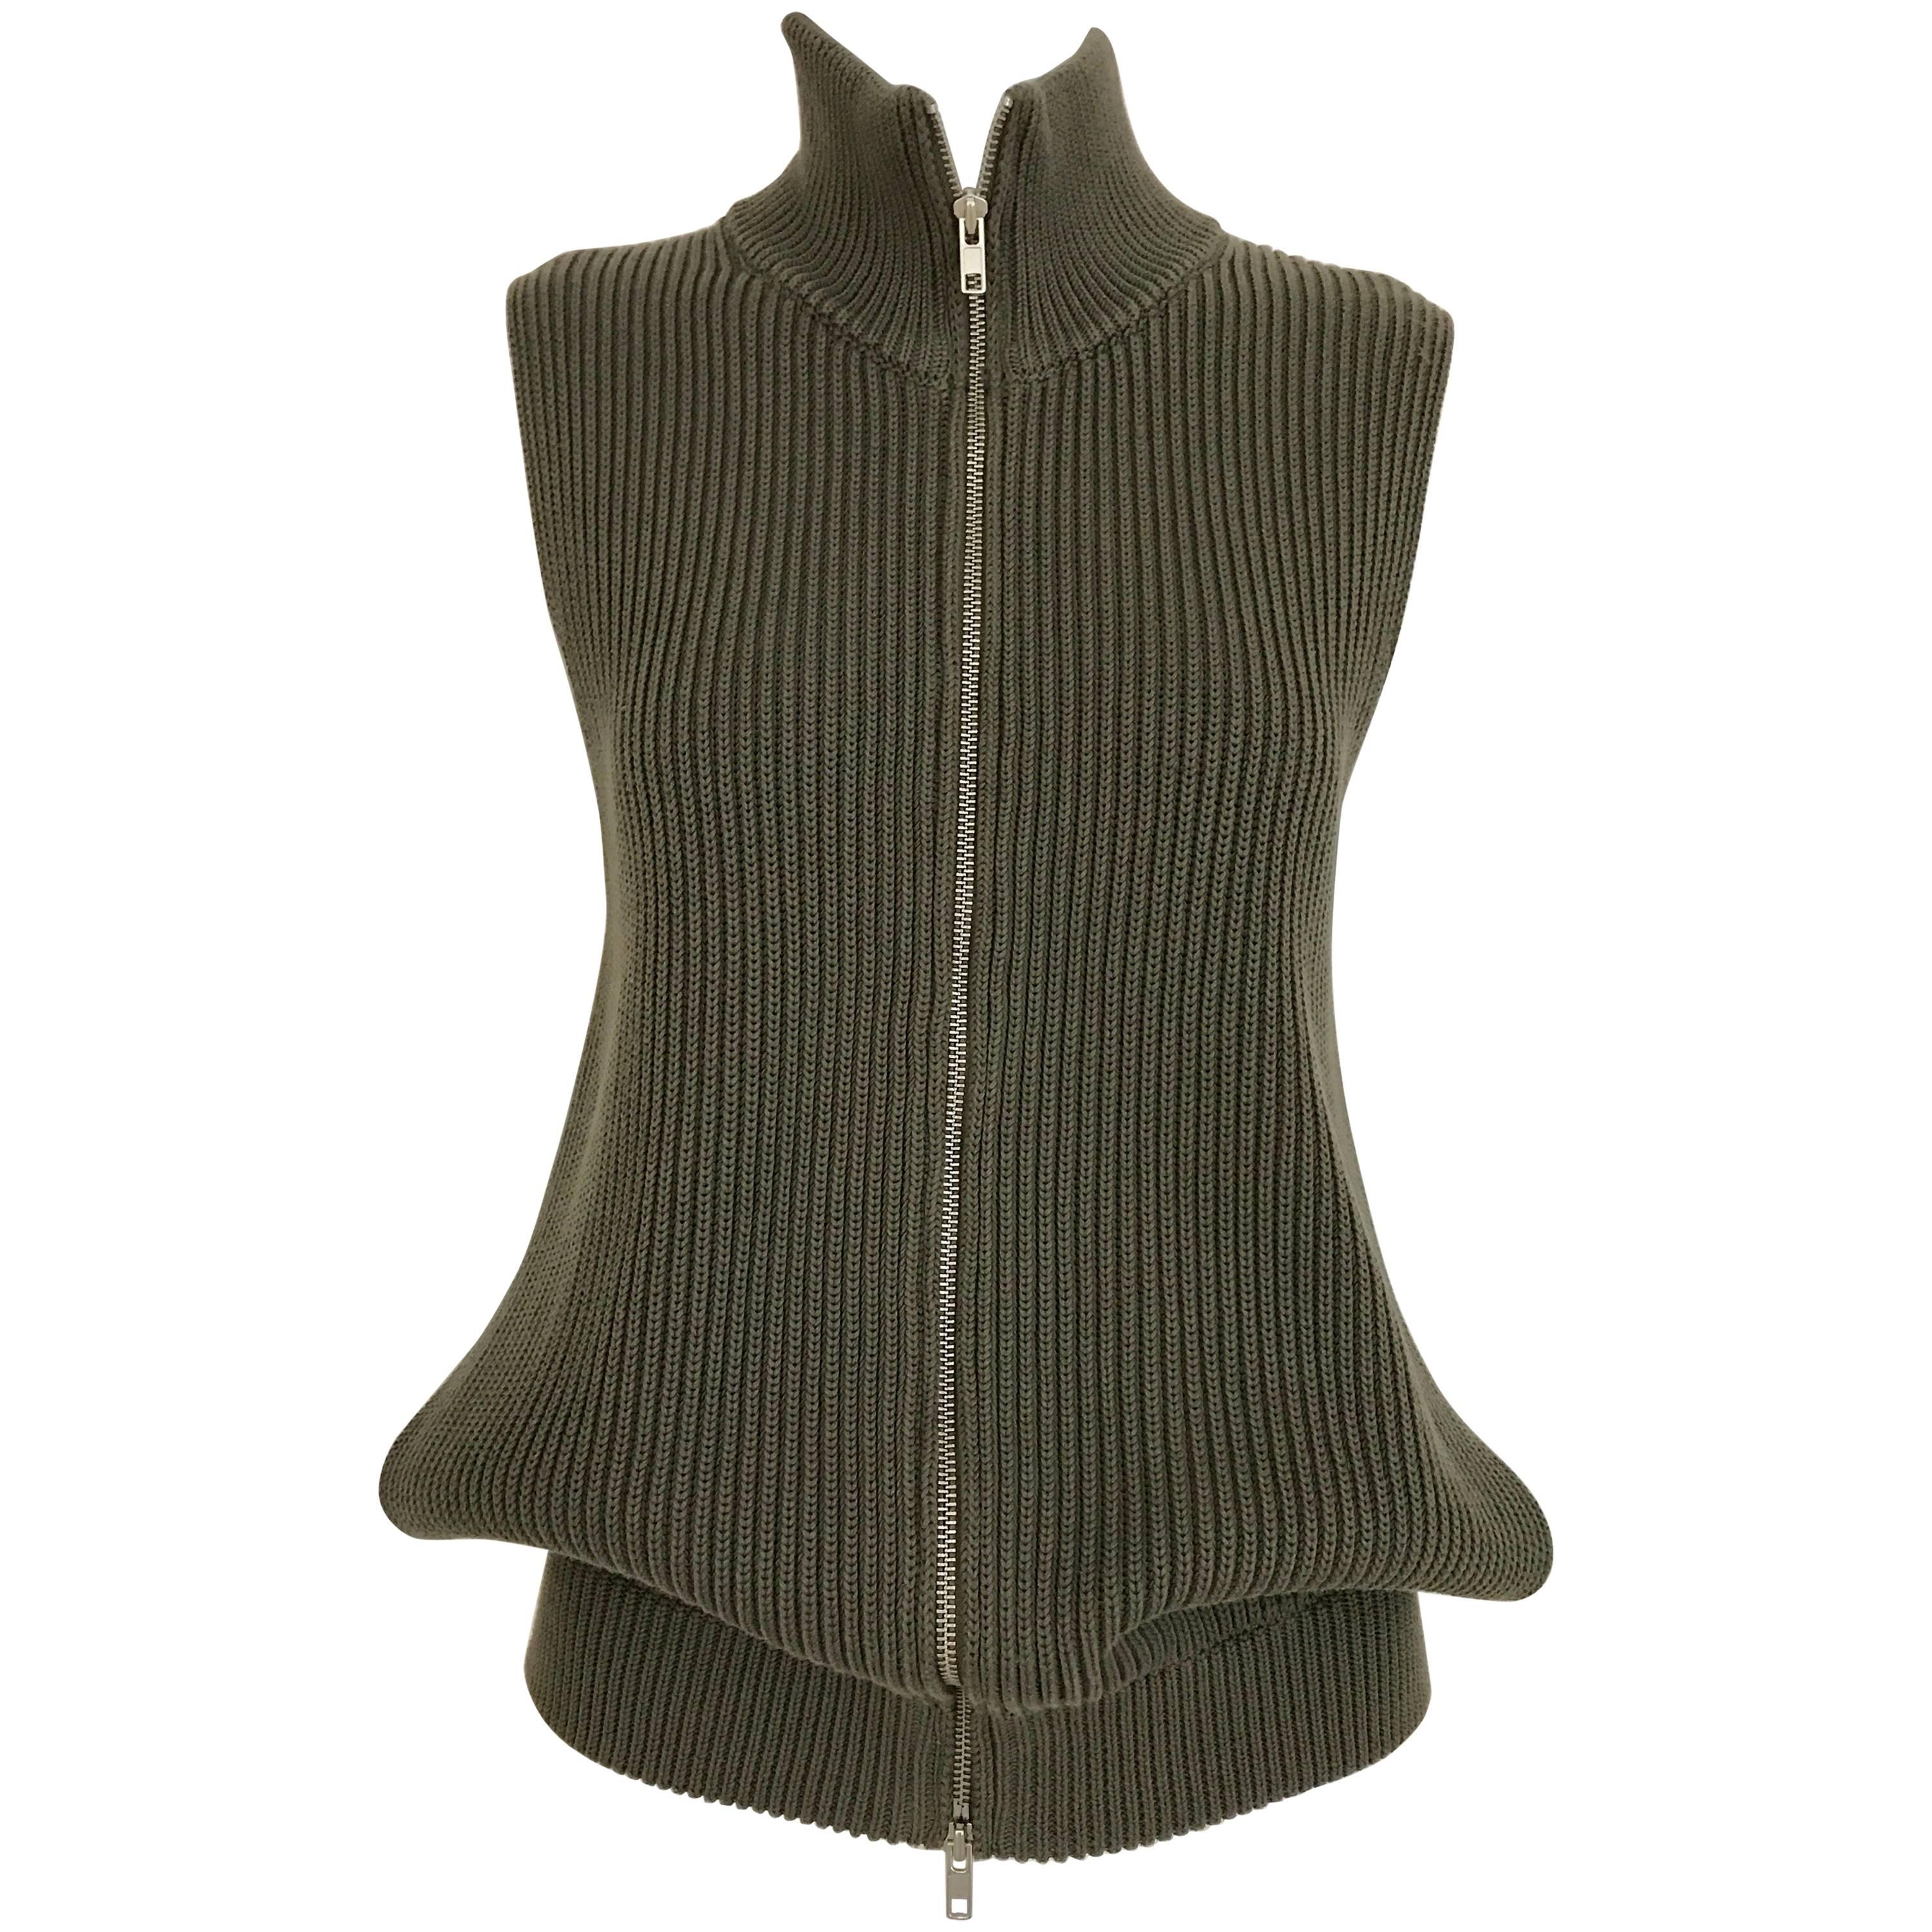 MARGIELA Olive Green Vest Cardigan Knit Top